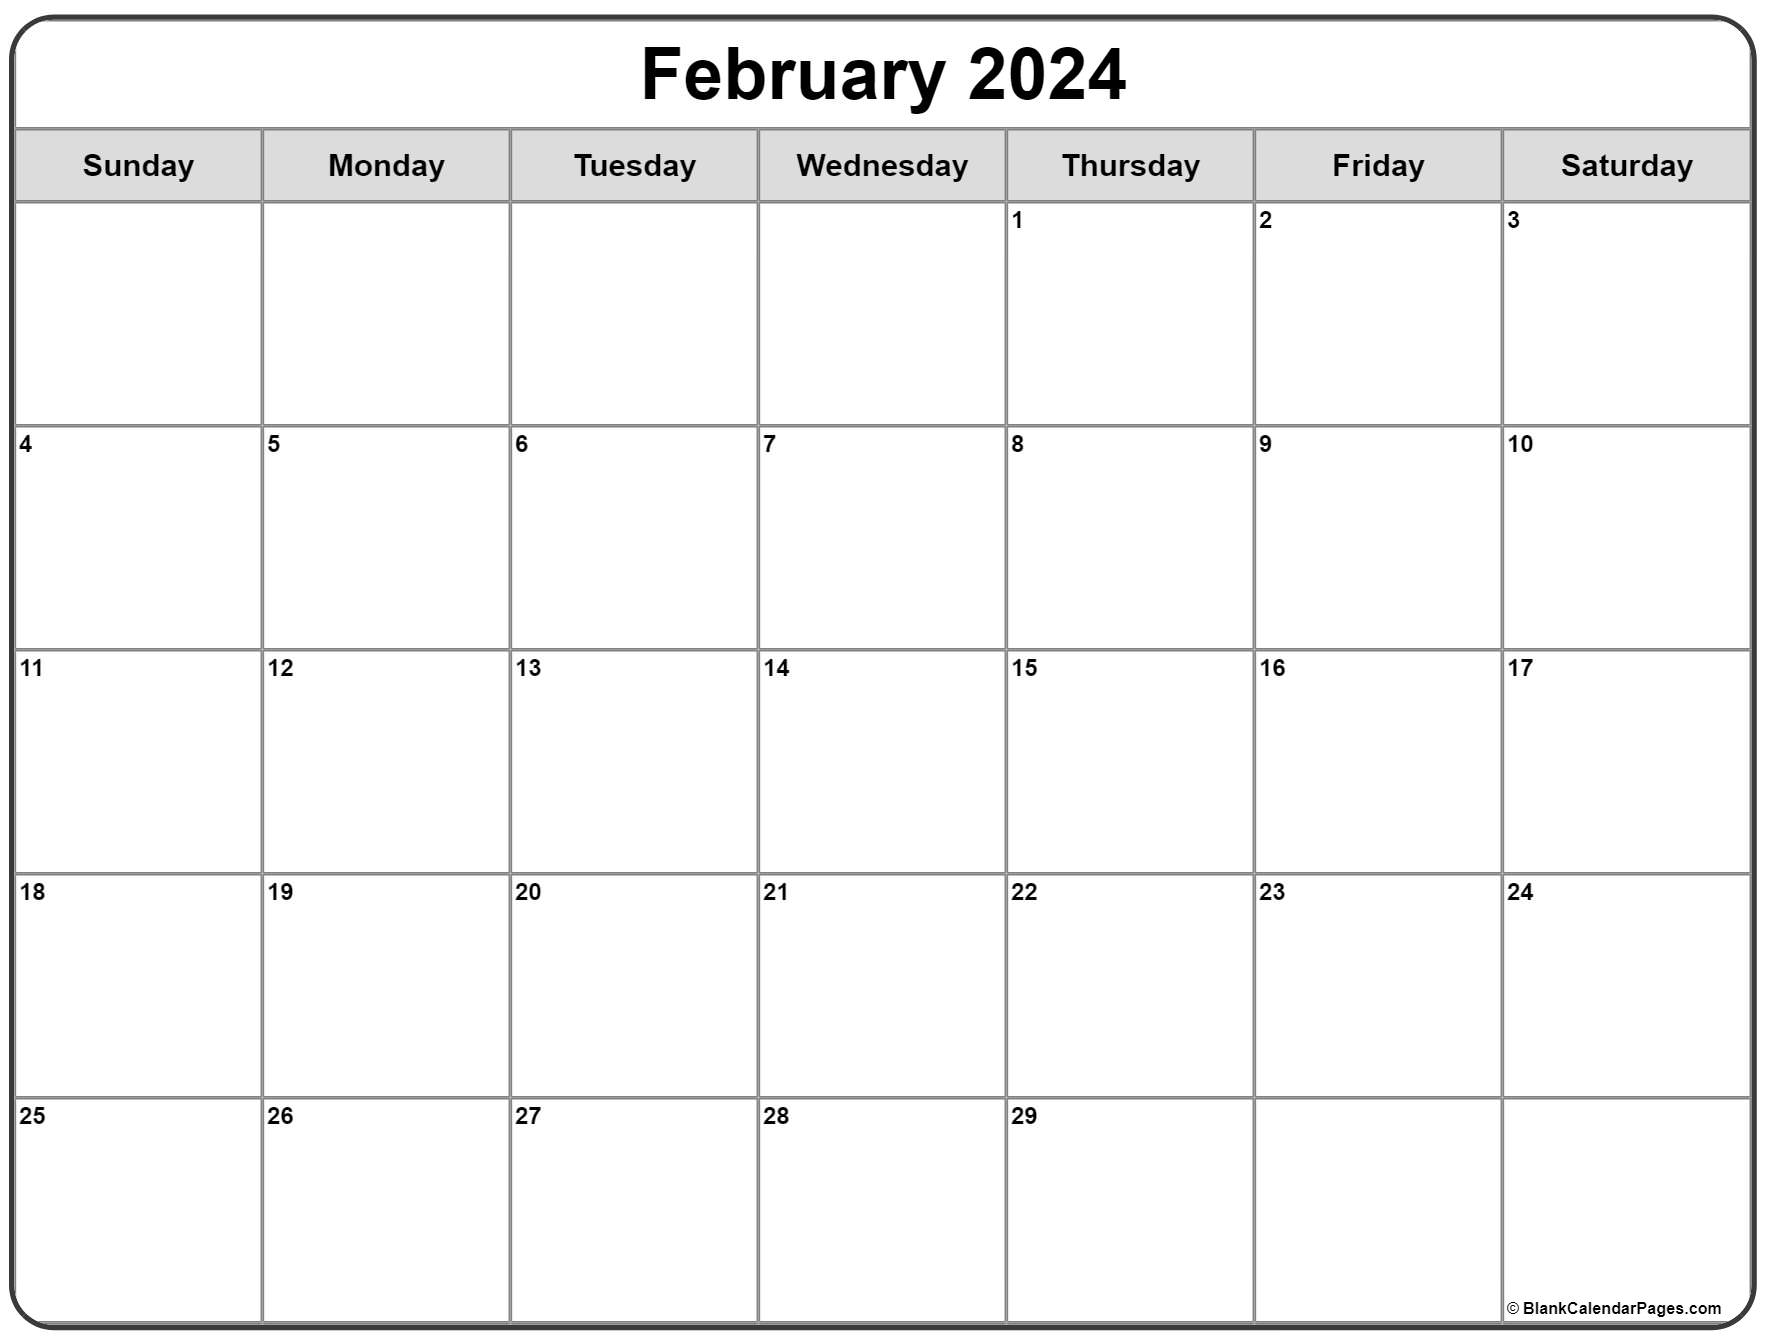 february-2024-calendar-handy-calendars